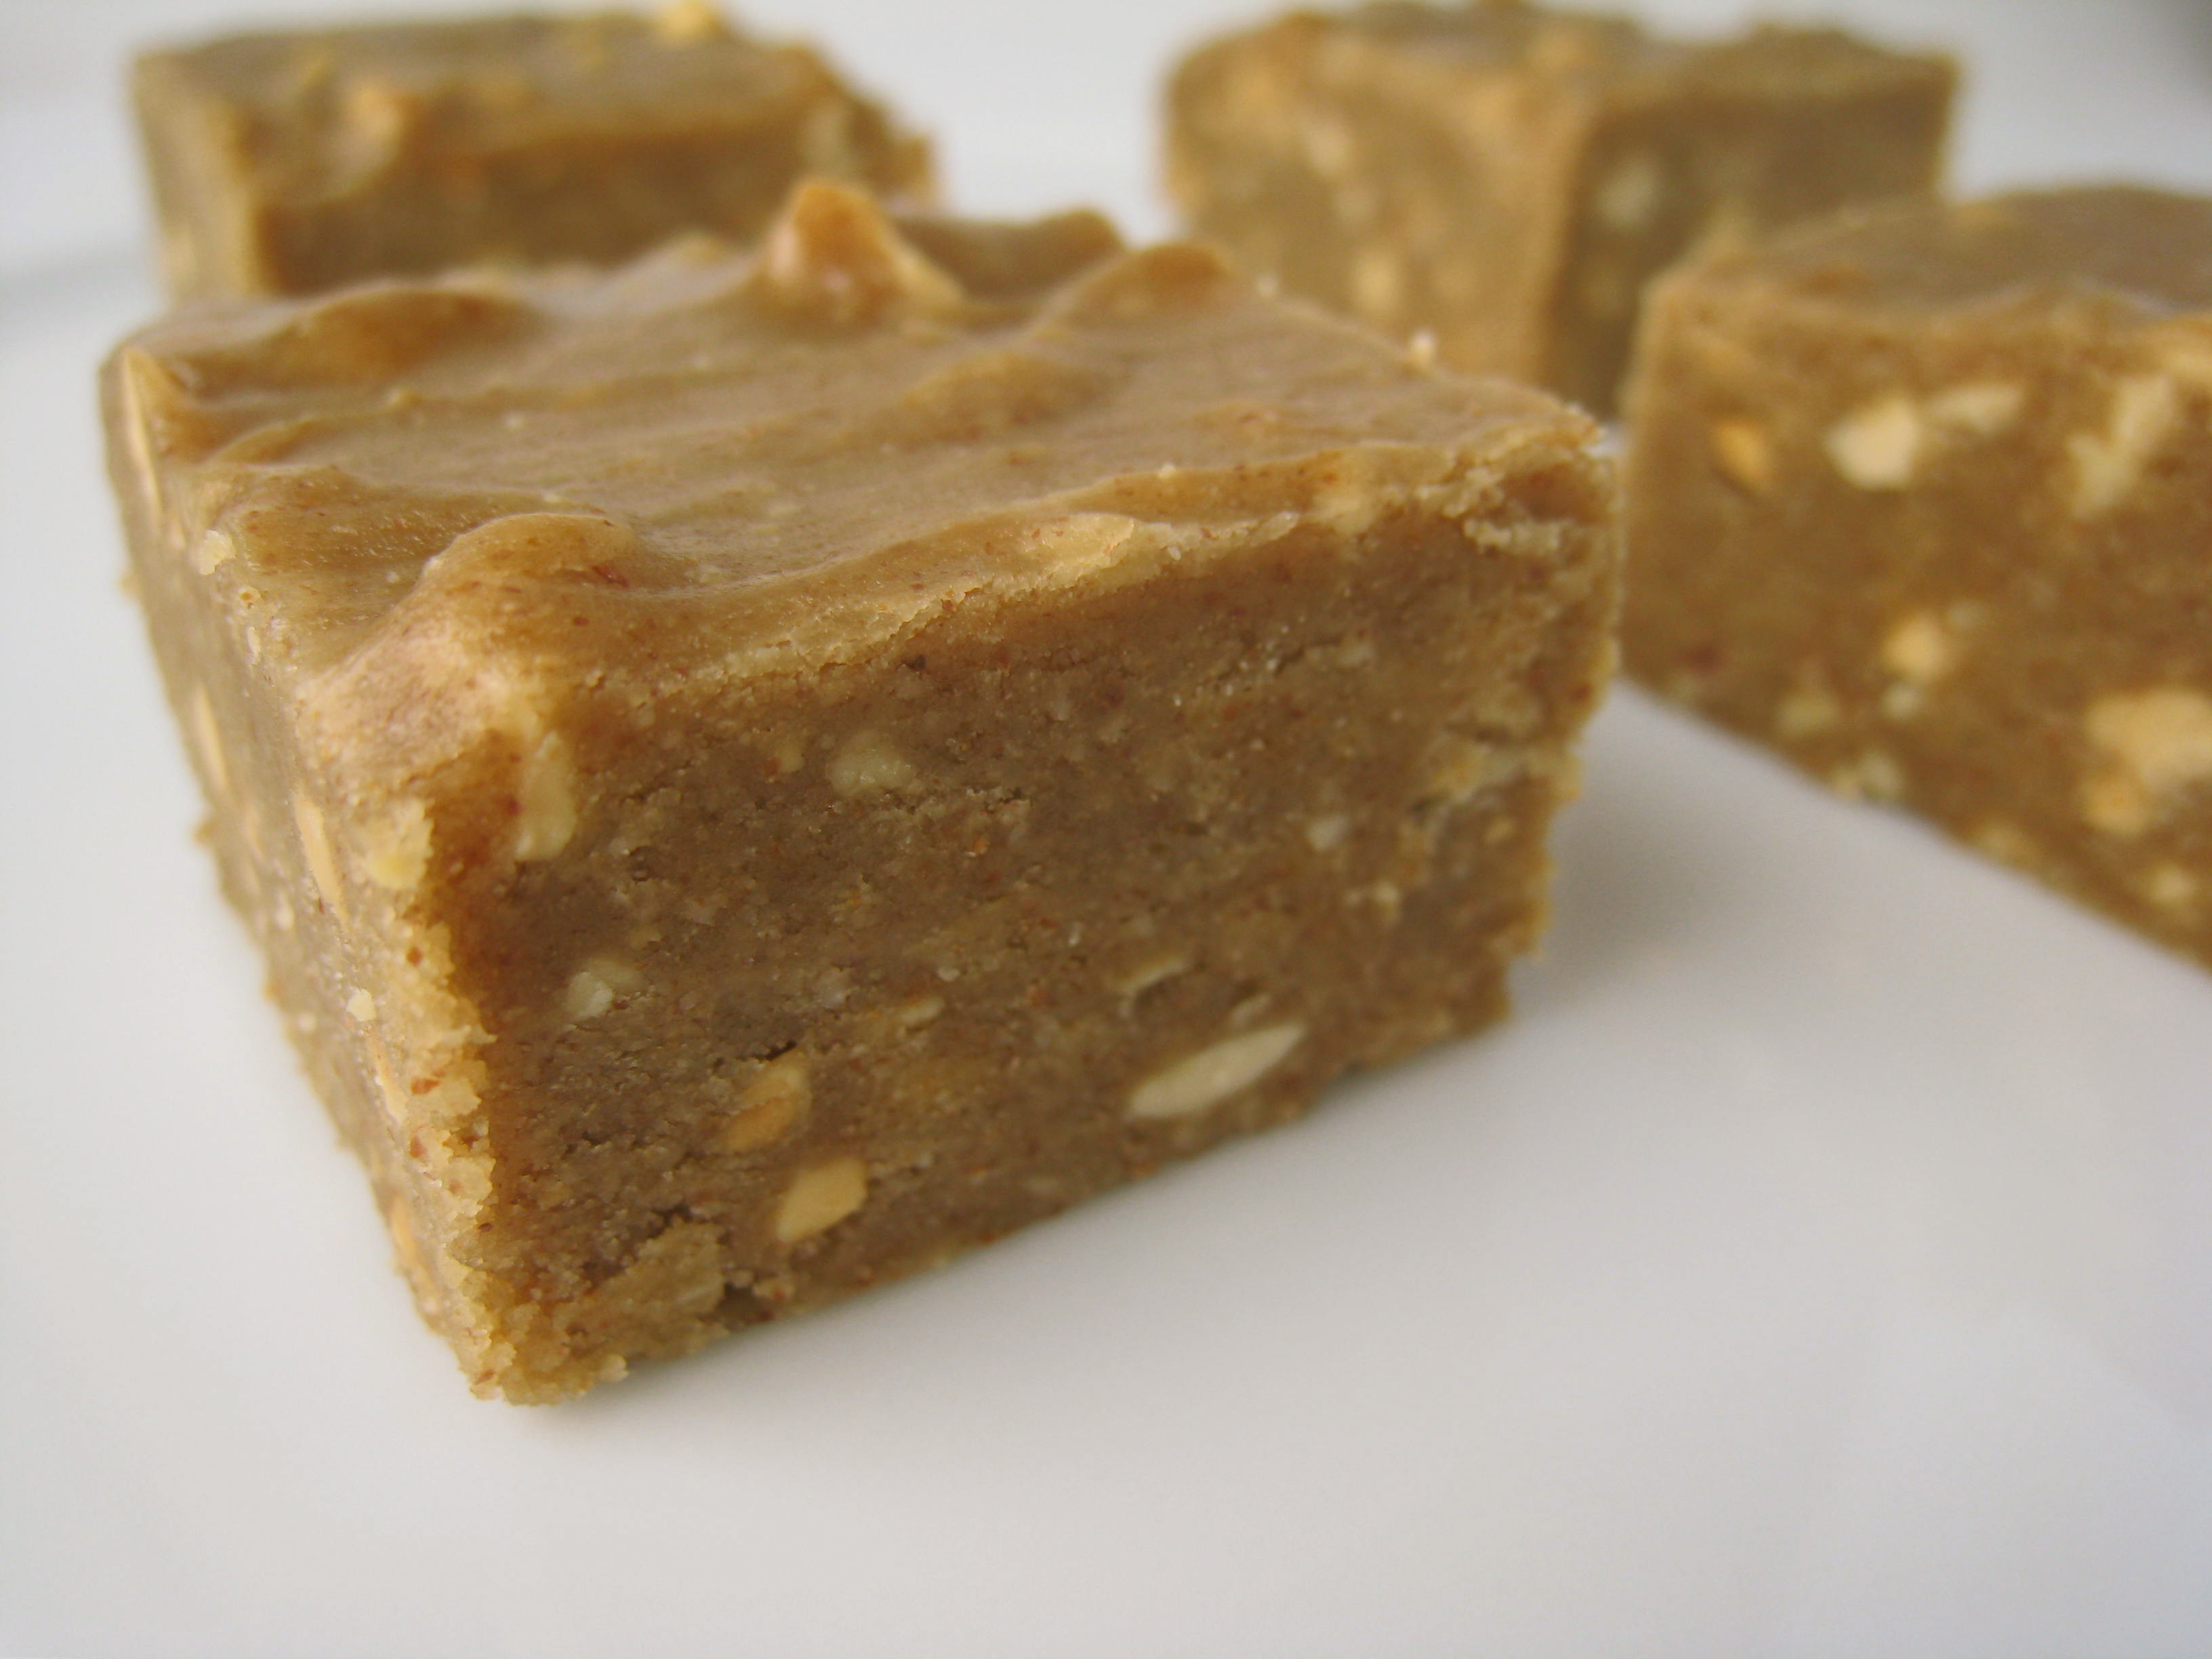 File:Vegan Peanut Butter Maple Fudge.jpg - Wikimedia Commons